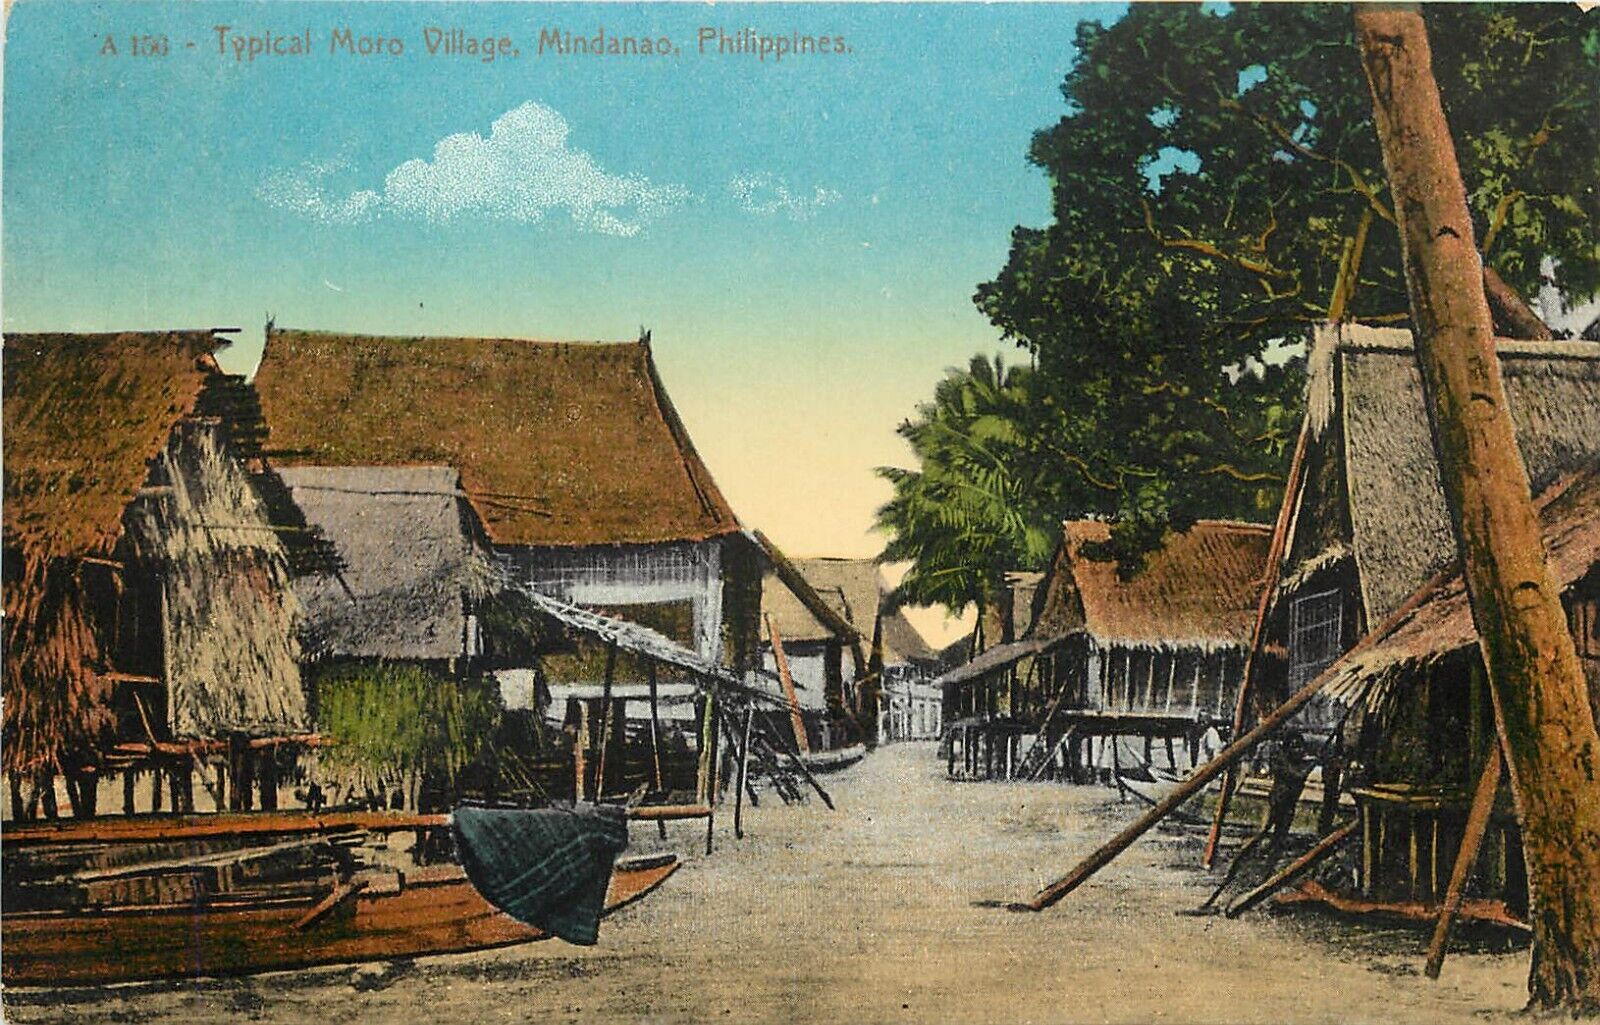 Postcard A156 Typical Moro Village, Mindanao Philippines PI Houses on Stilts